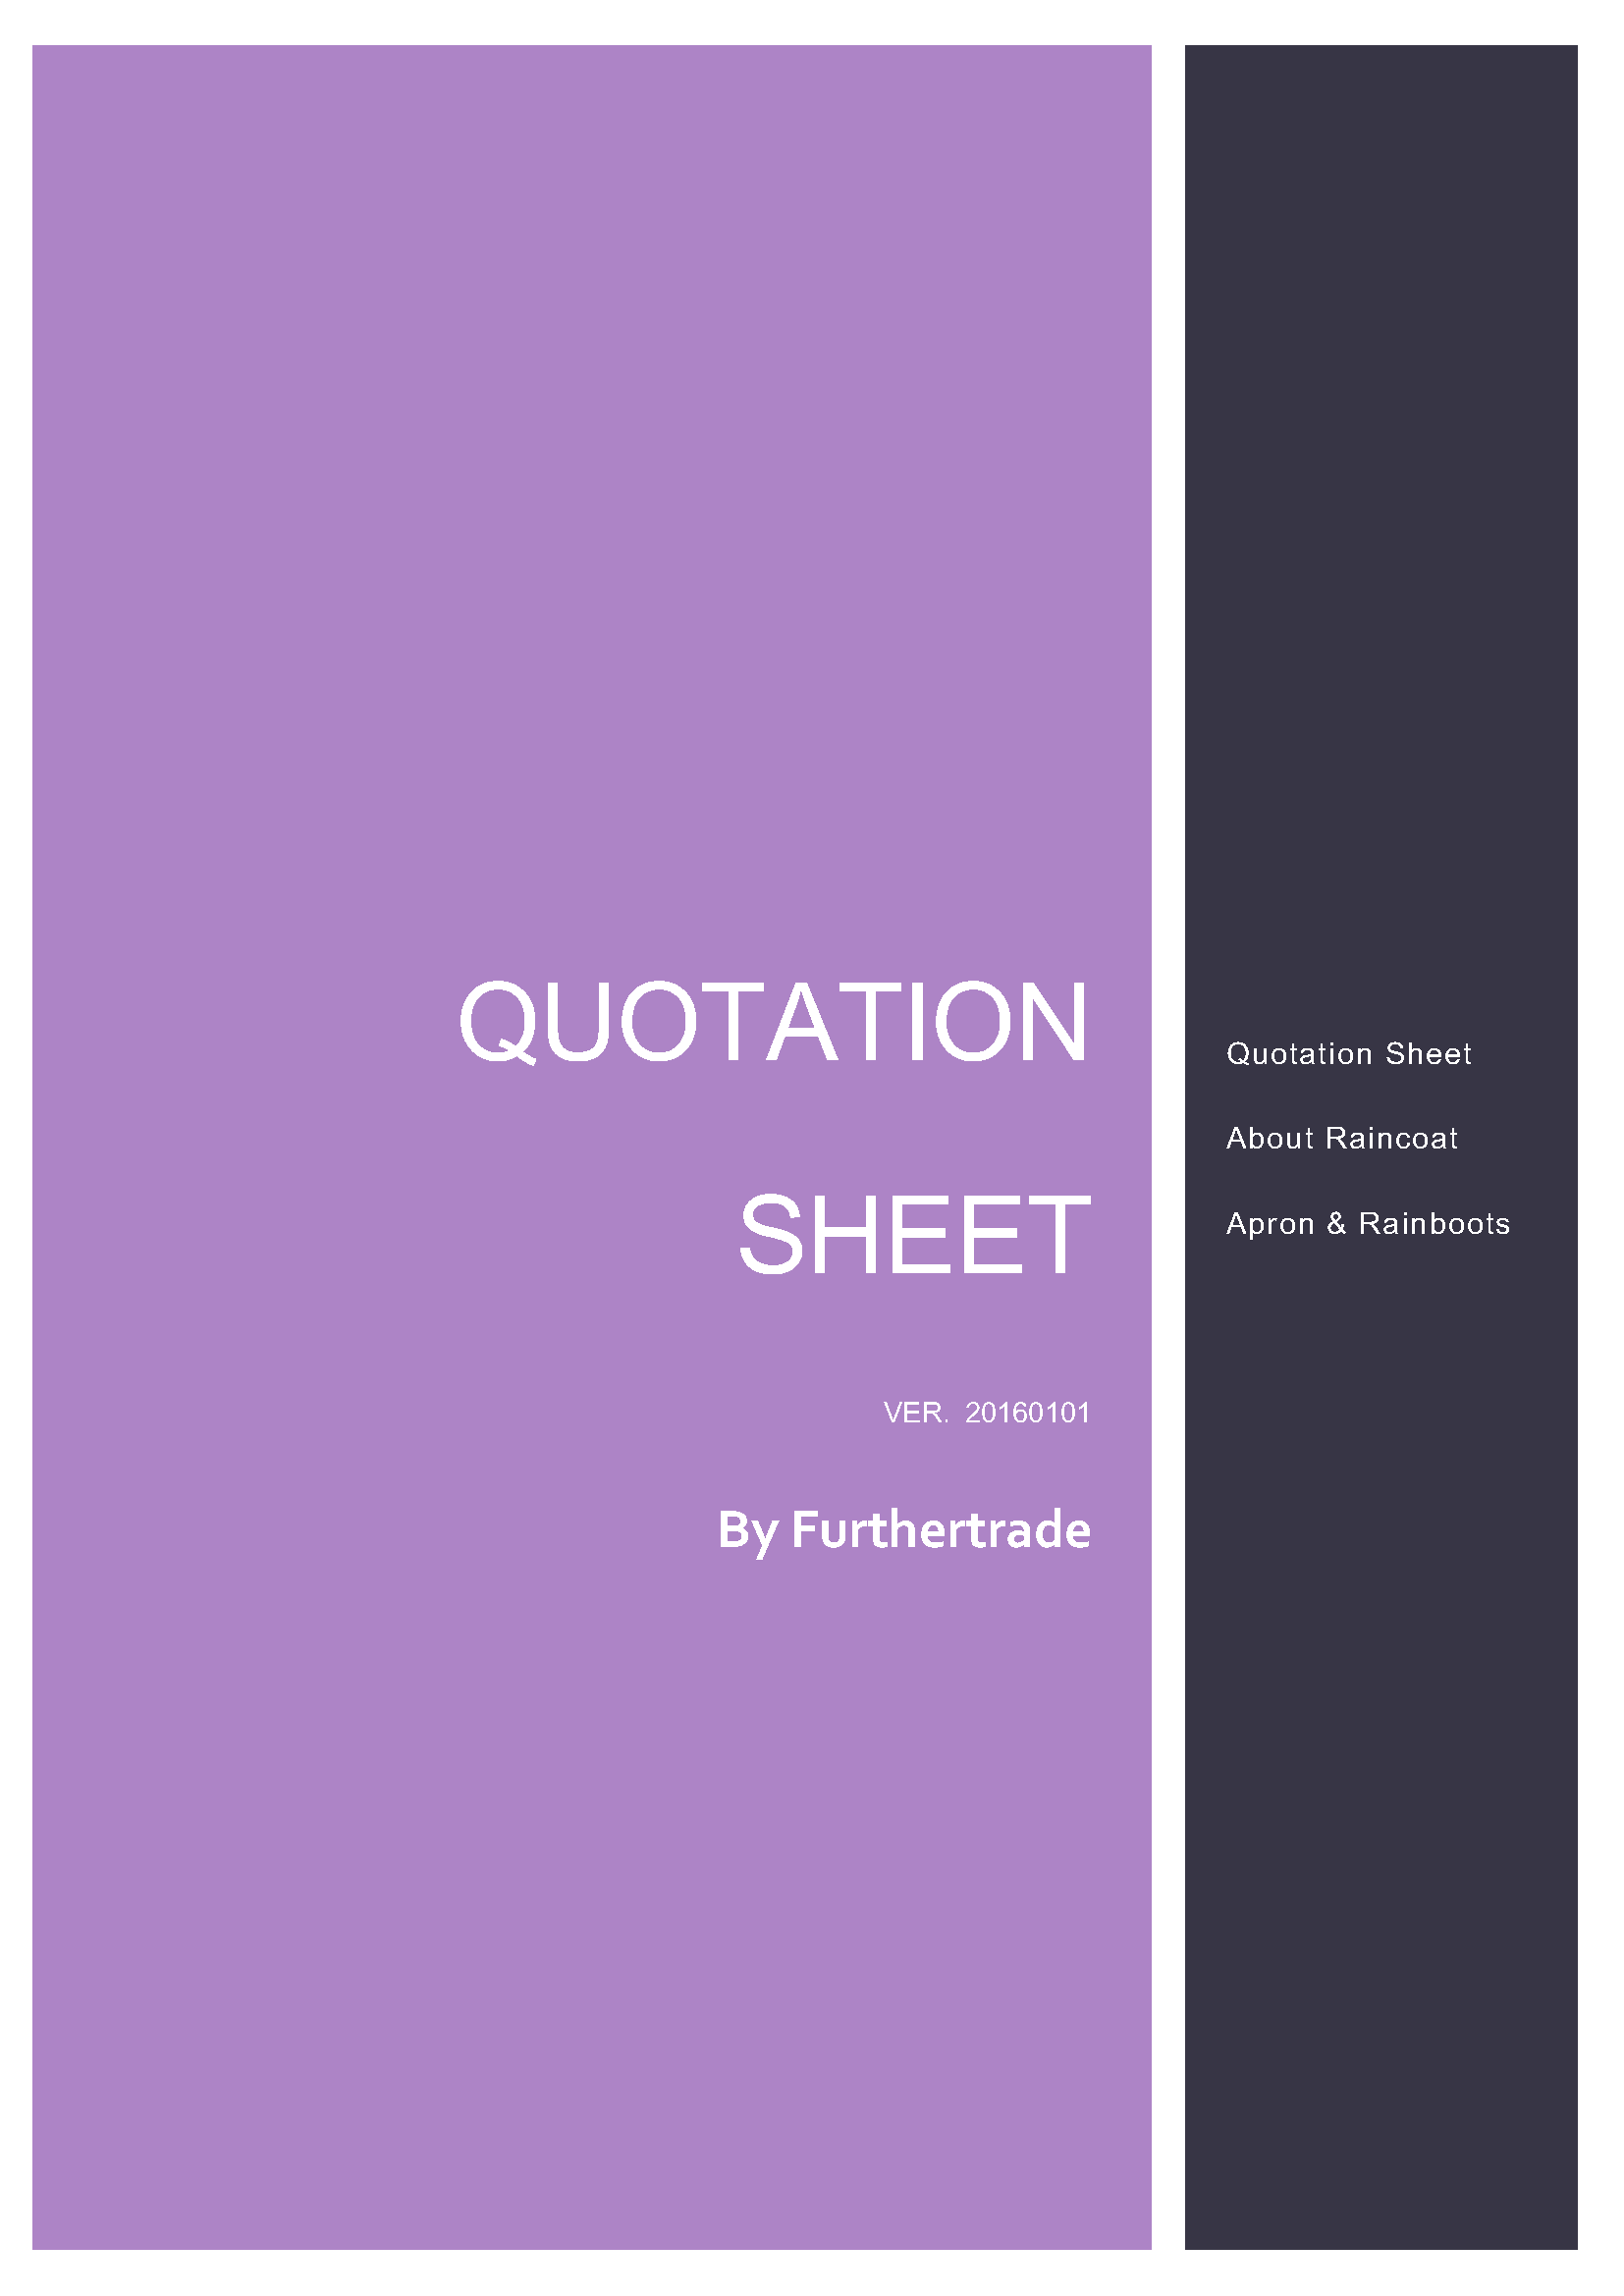 Raincoat Quotation Sheet from Furthertrade.com